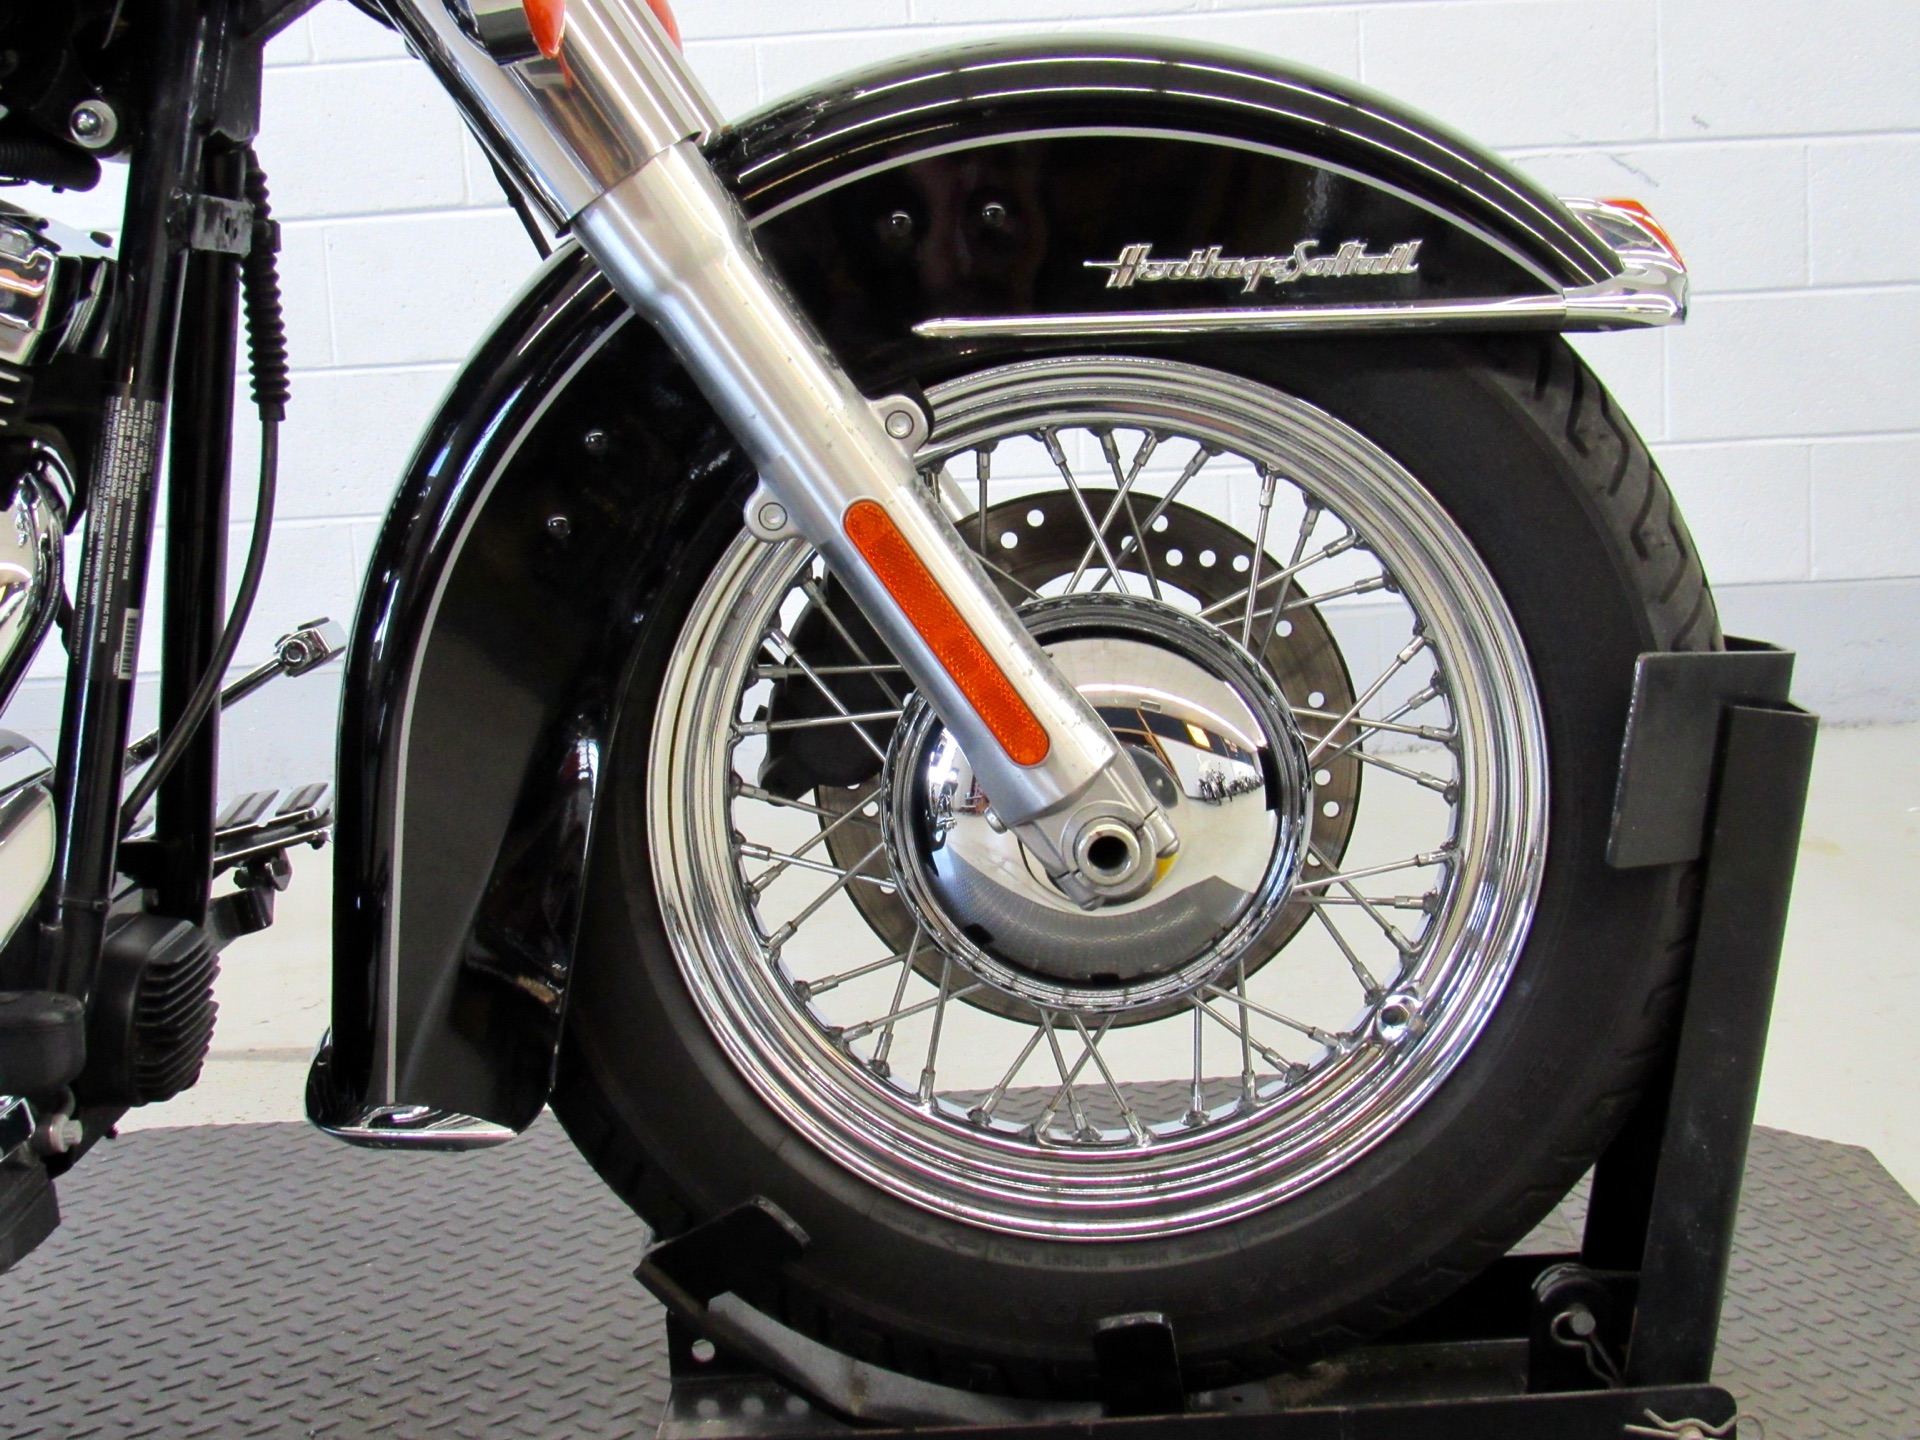 2013 Harley-Davidson Heritage Softail® Classic in Fredericksburg, Virginia - Photo 11